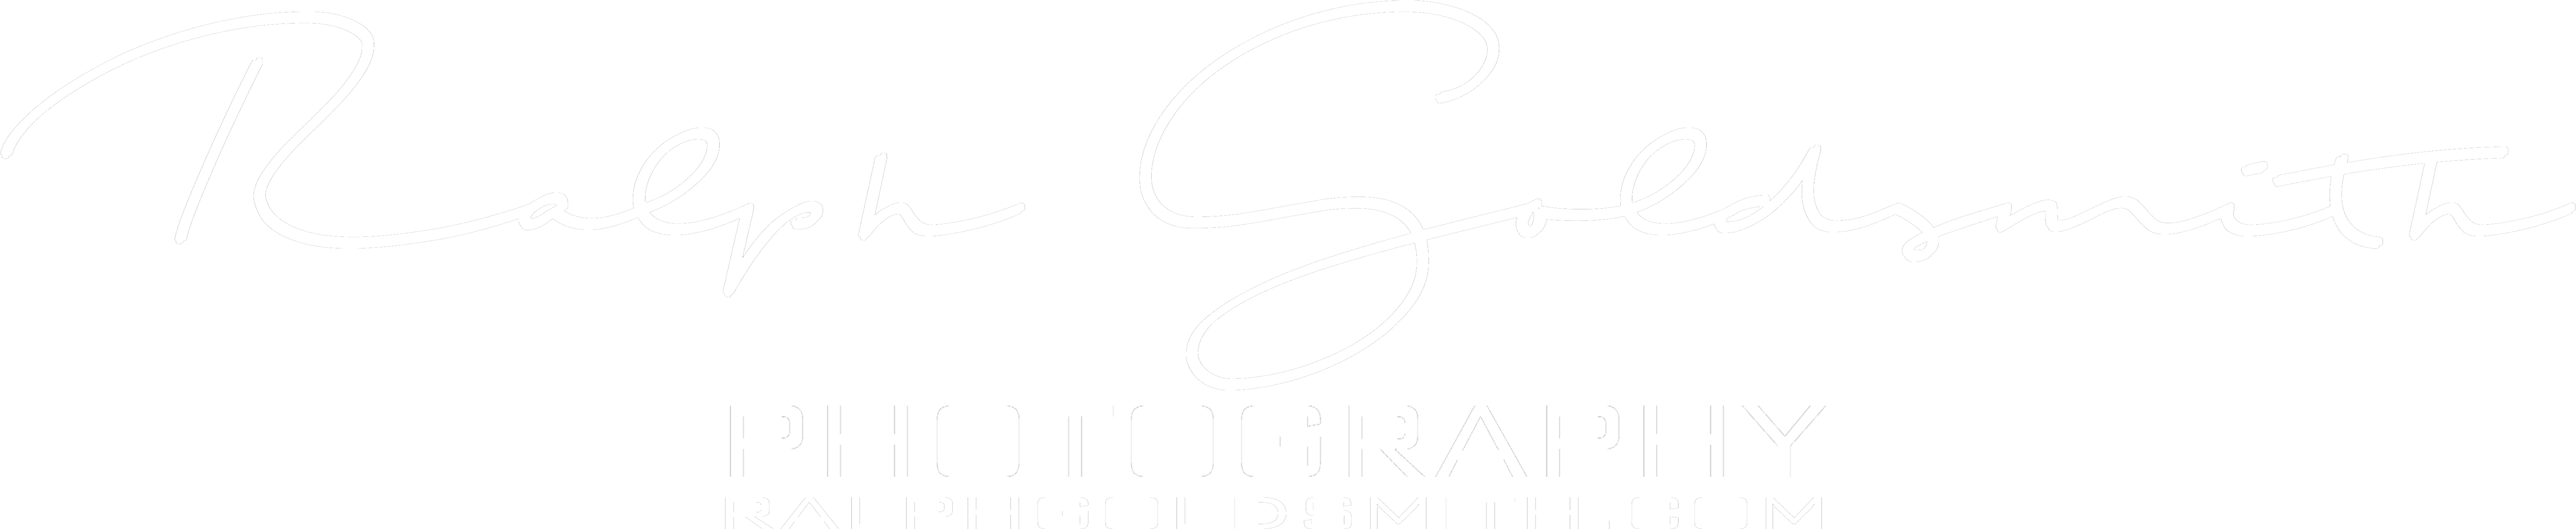 Ralph Goldsmith Photography Logo PNG